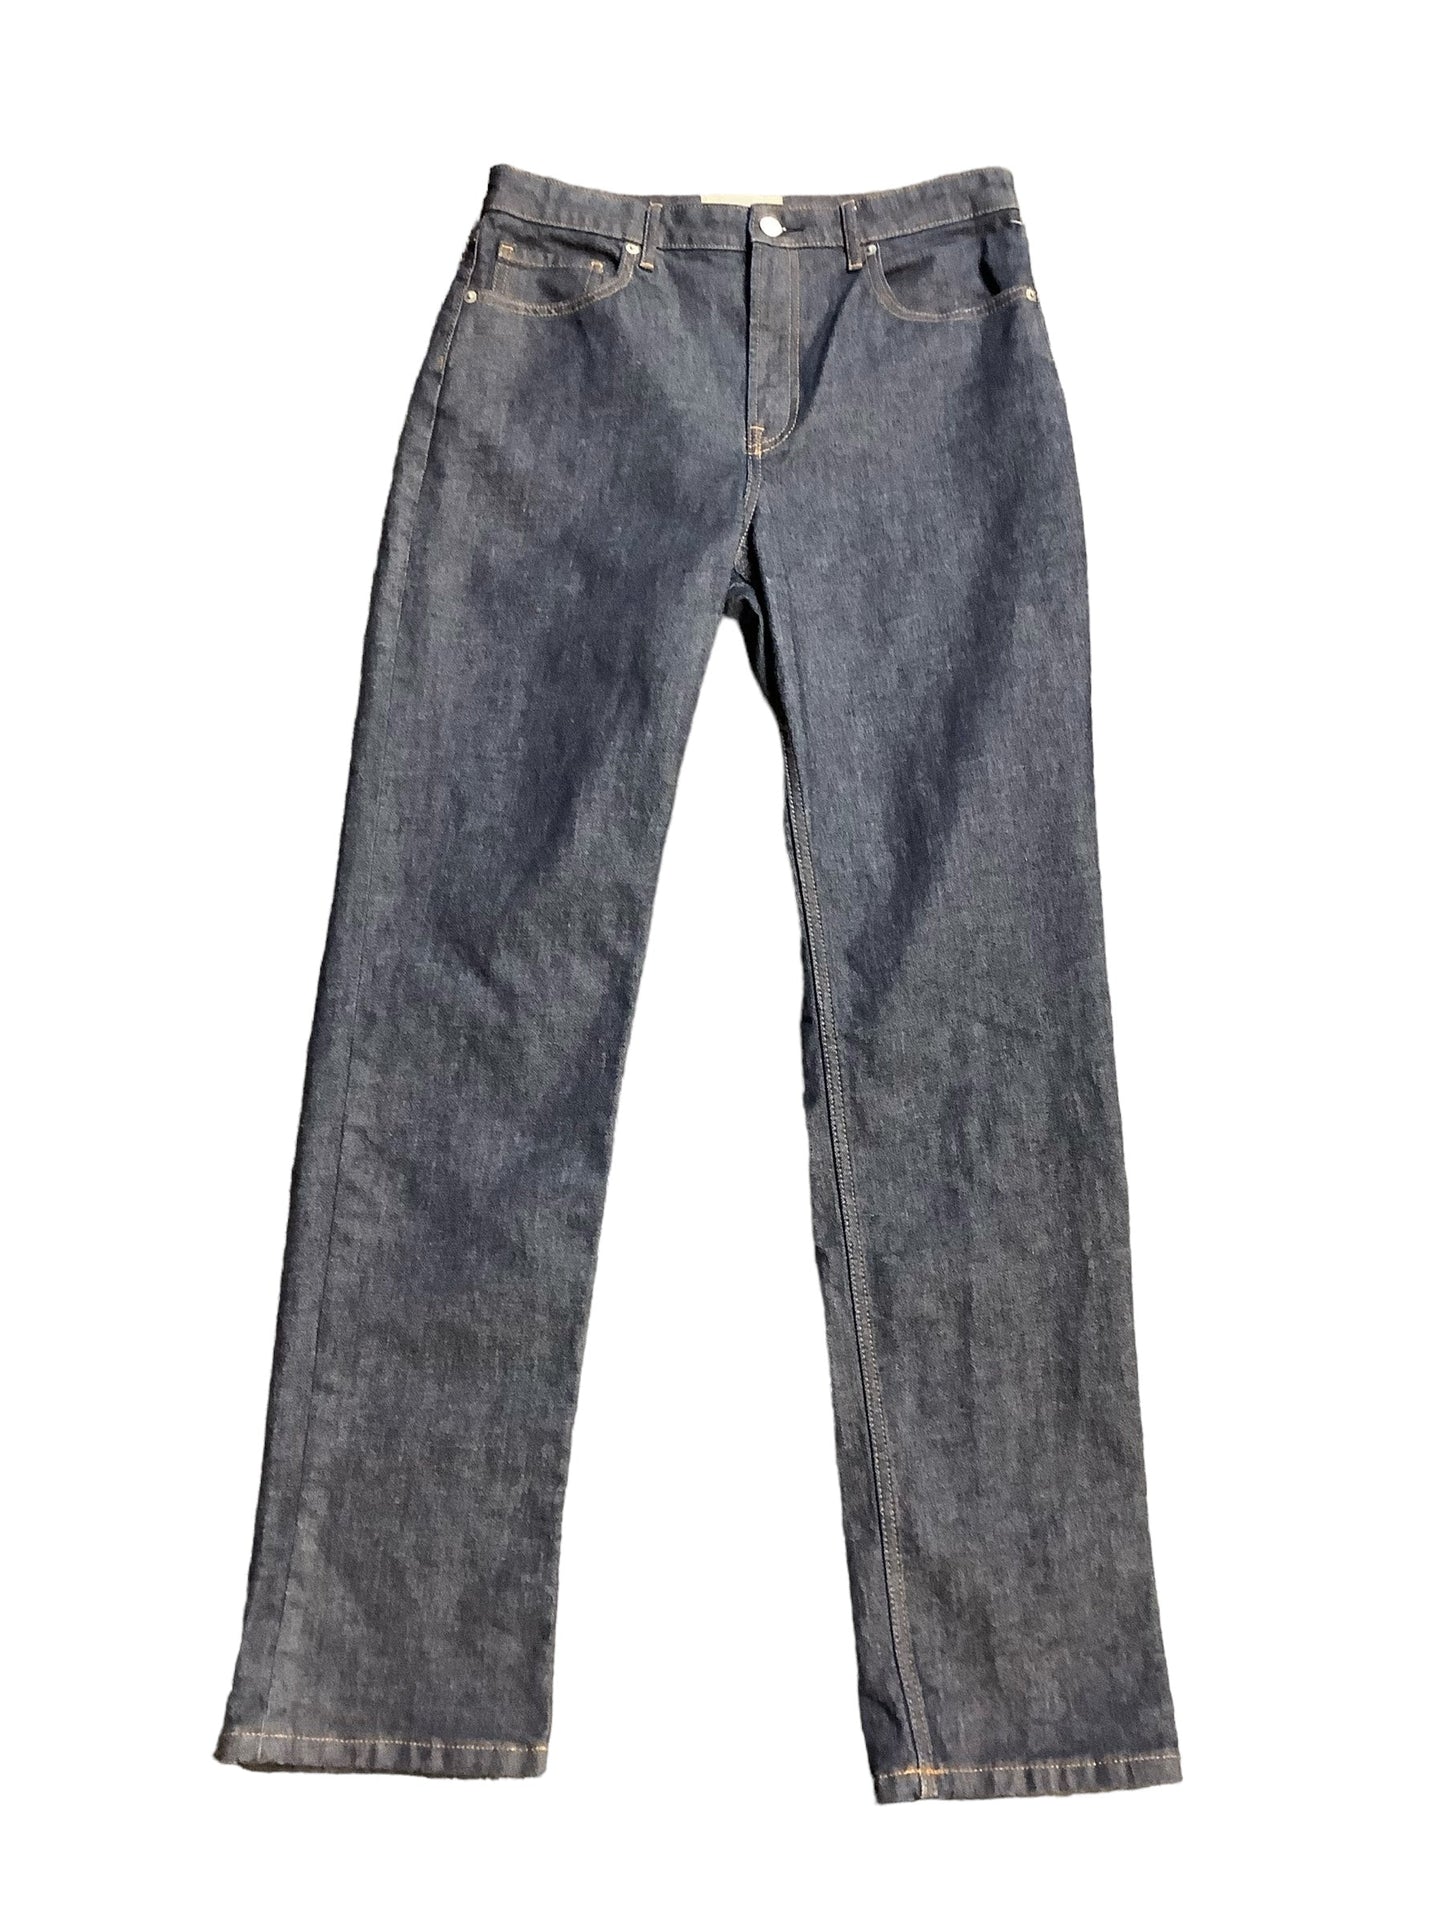 Denim Jeans Straight Everlane, Size 8